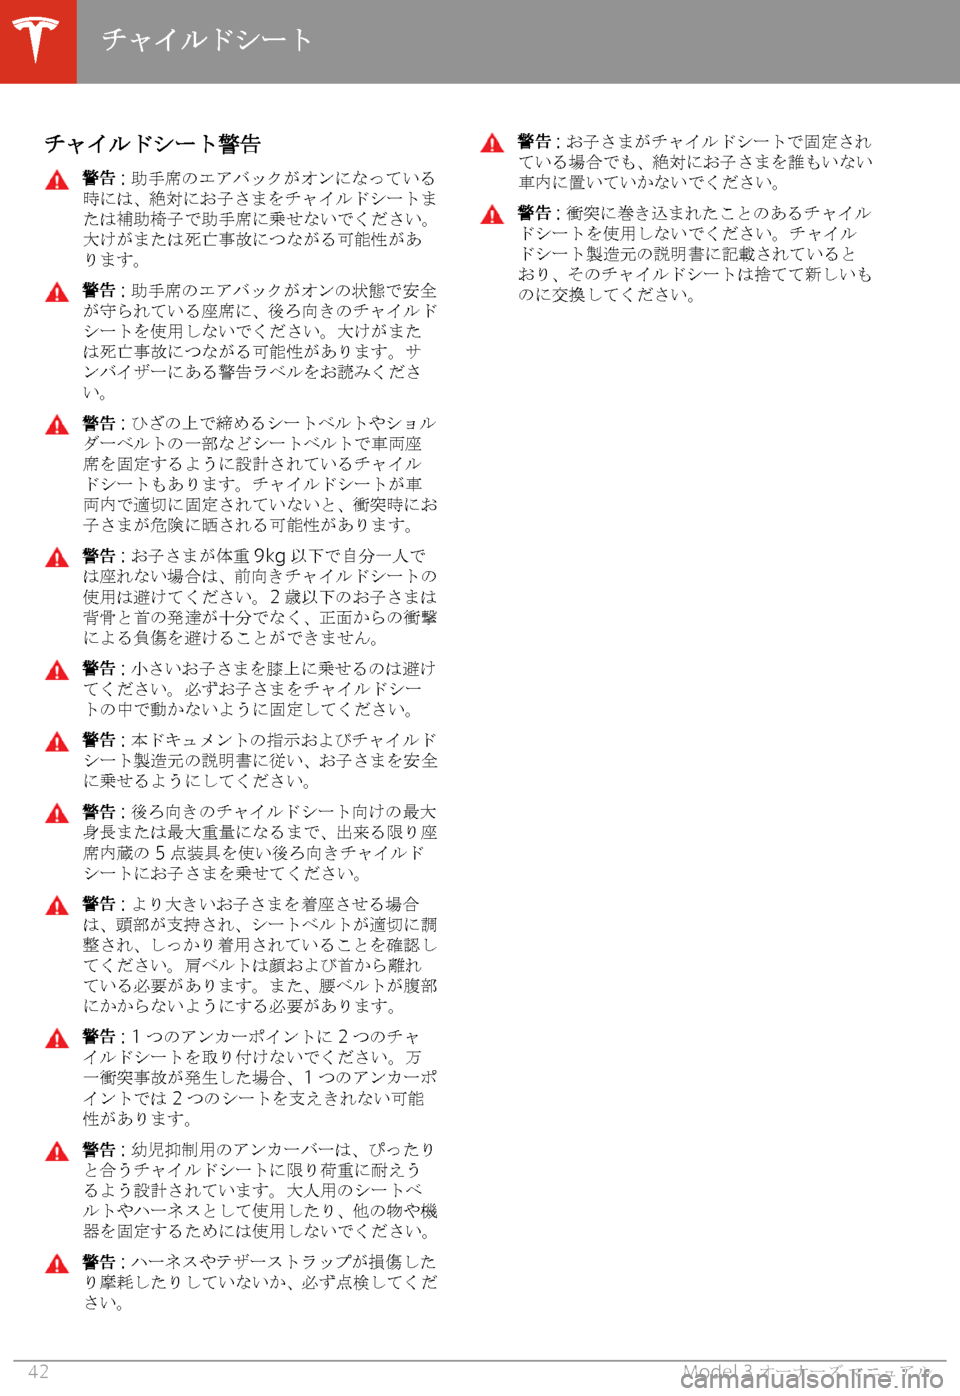 TESLA MODEL 3 2019  取扱説明書 (in Japanese)  